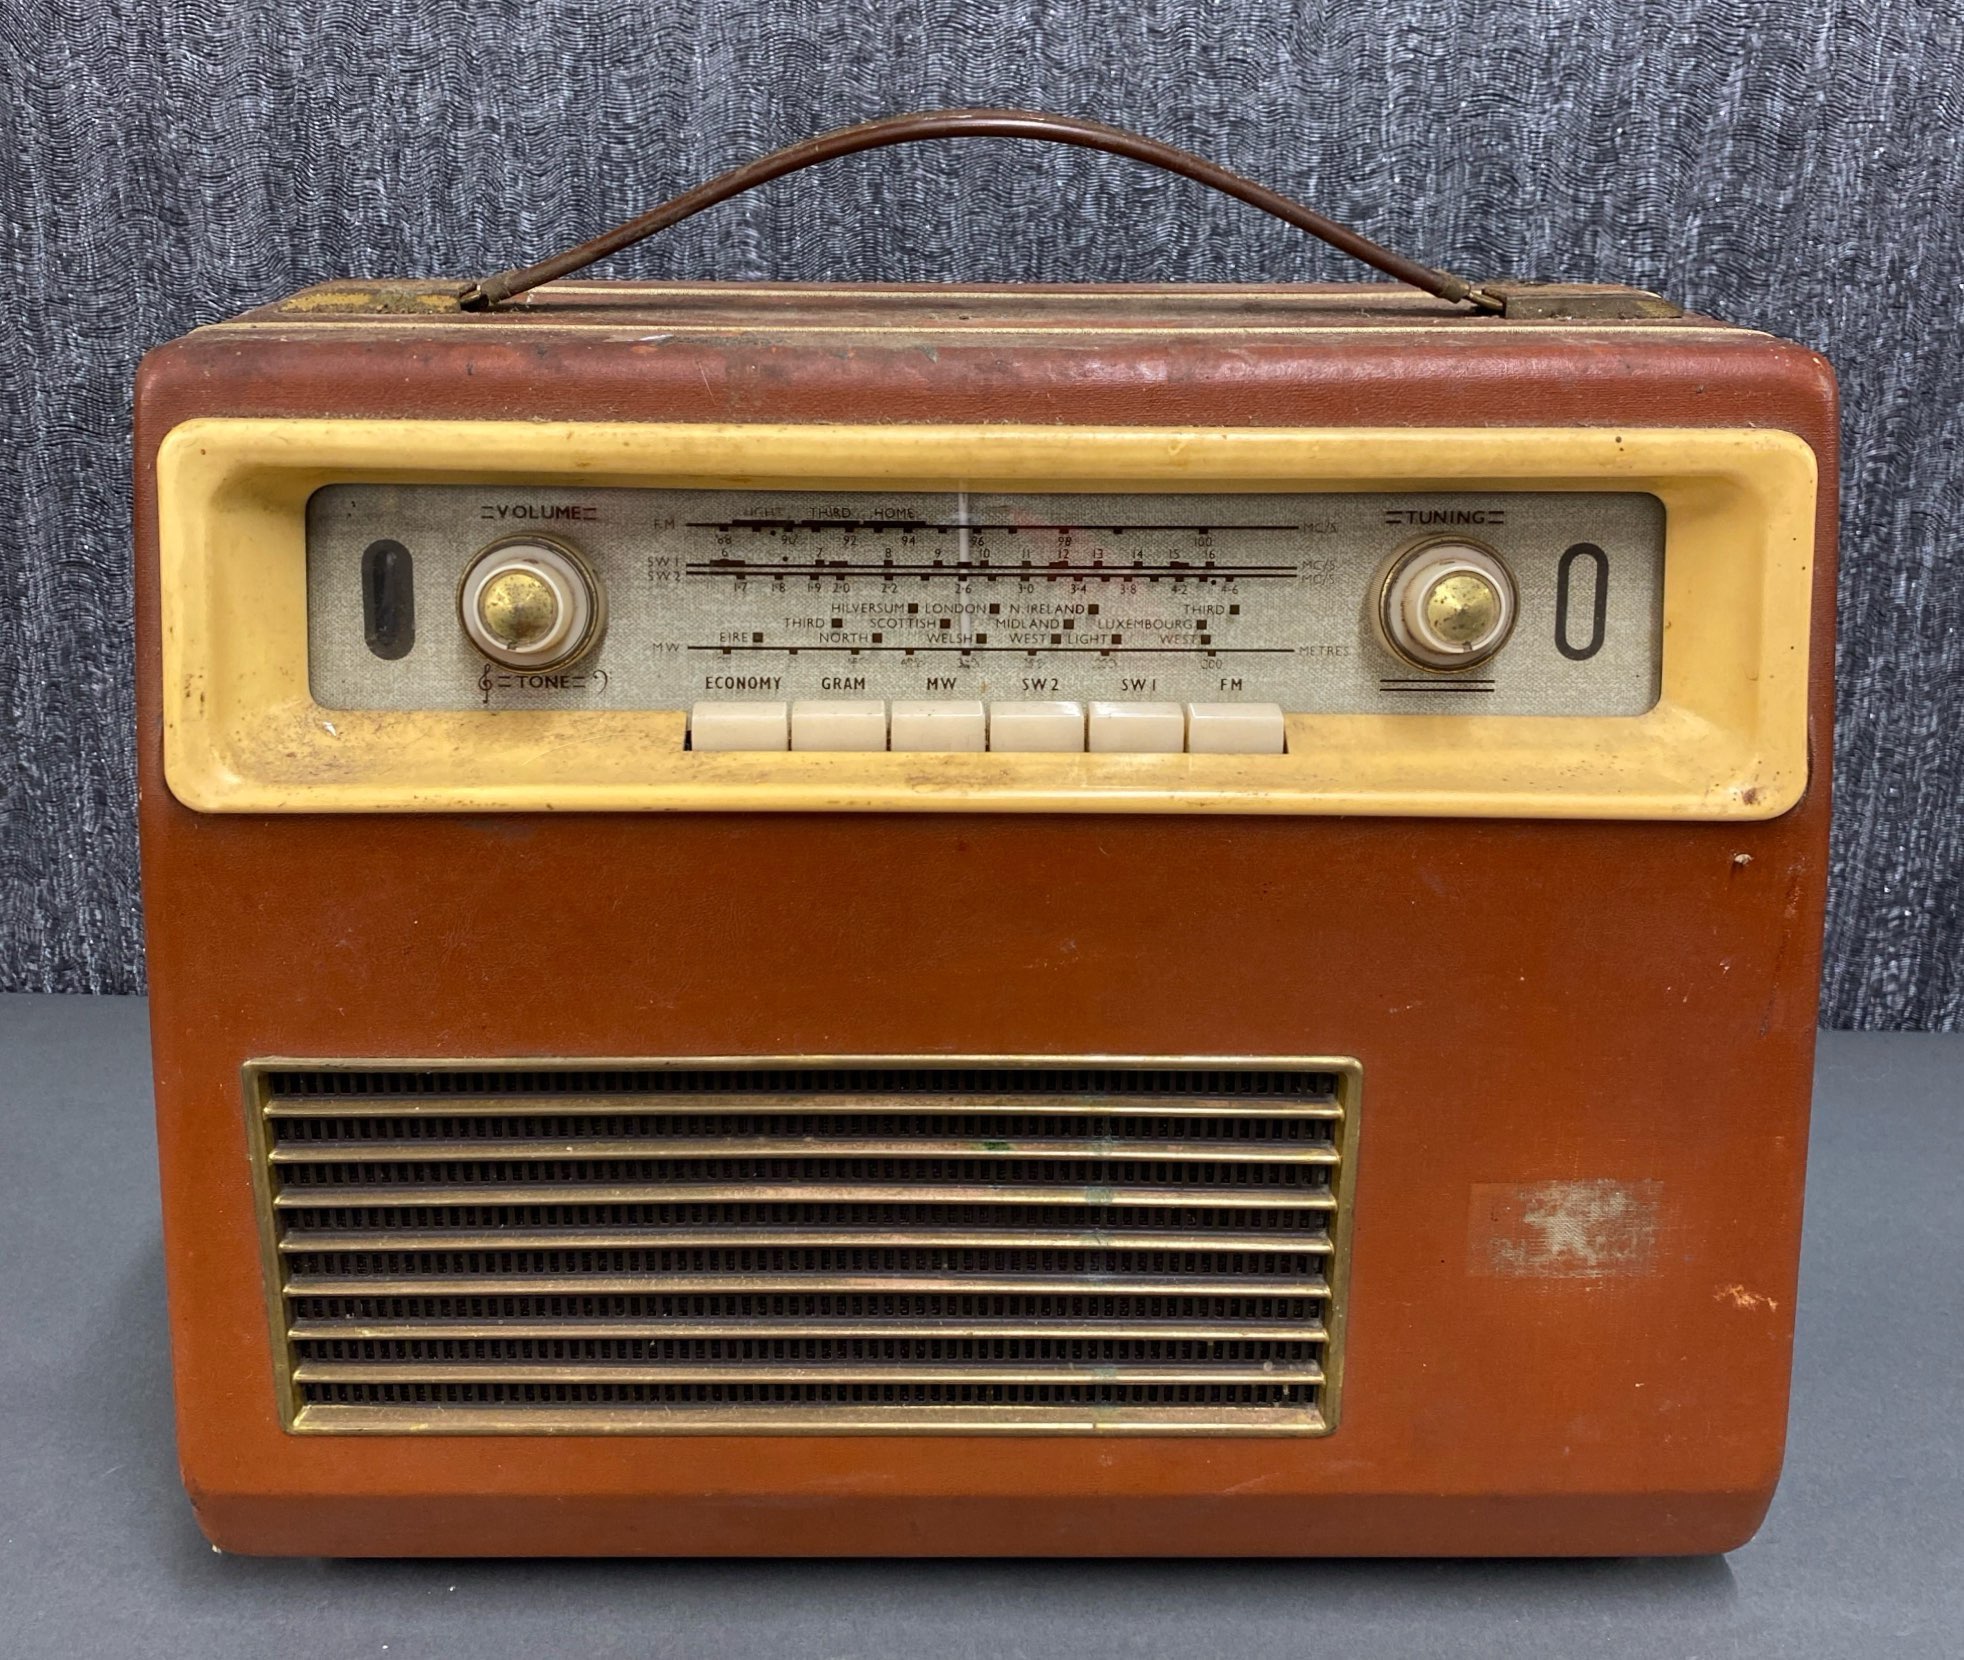 A portable Berec radio.